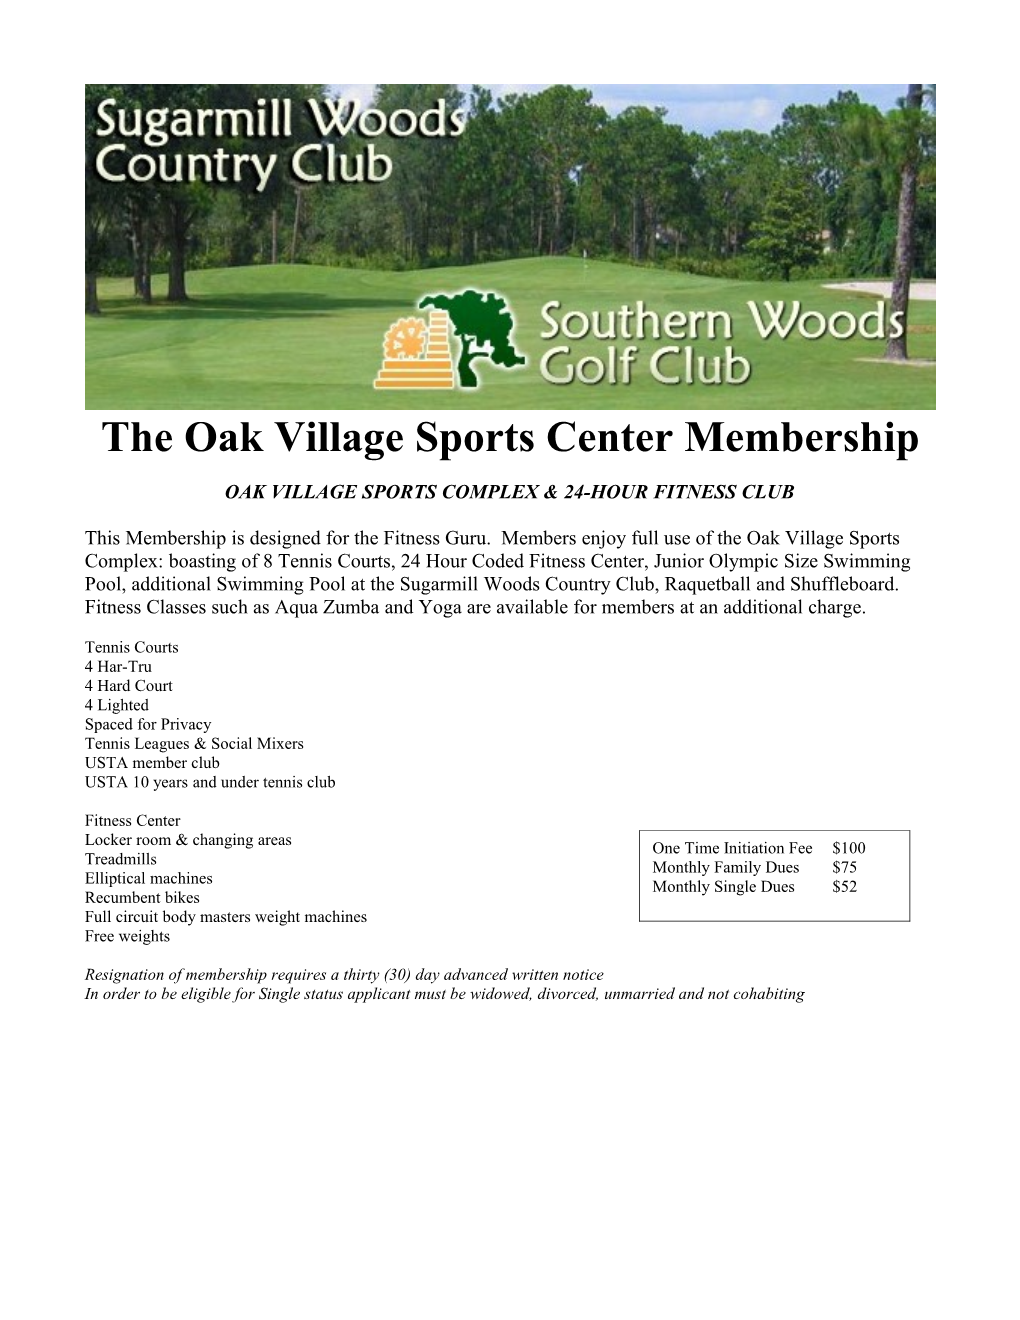 The Oak Village Sports Center Membership